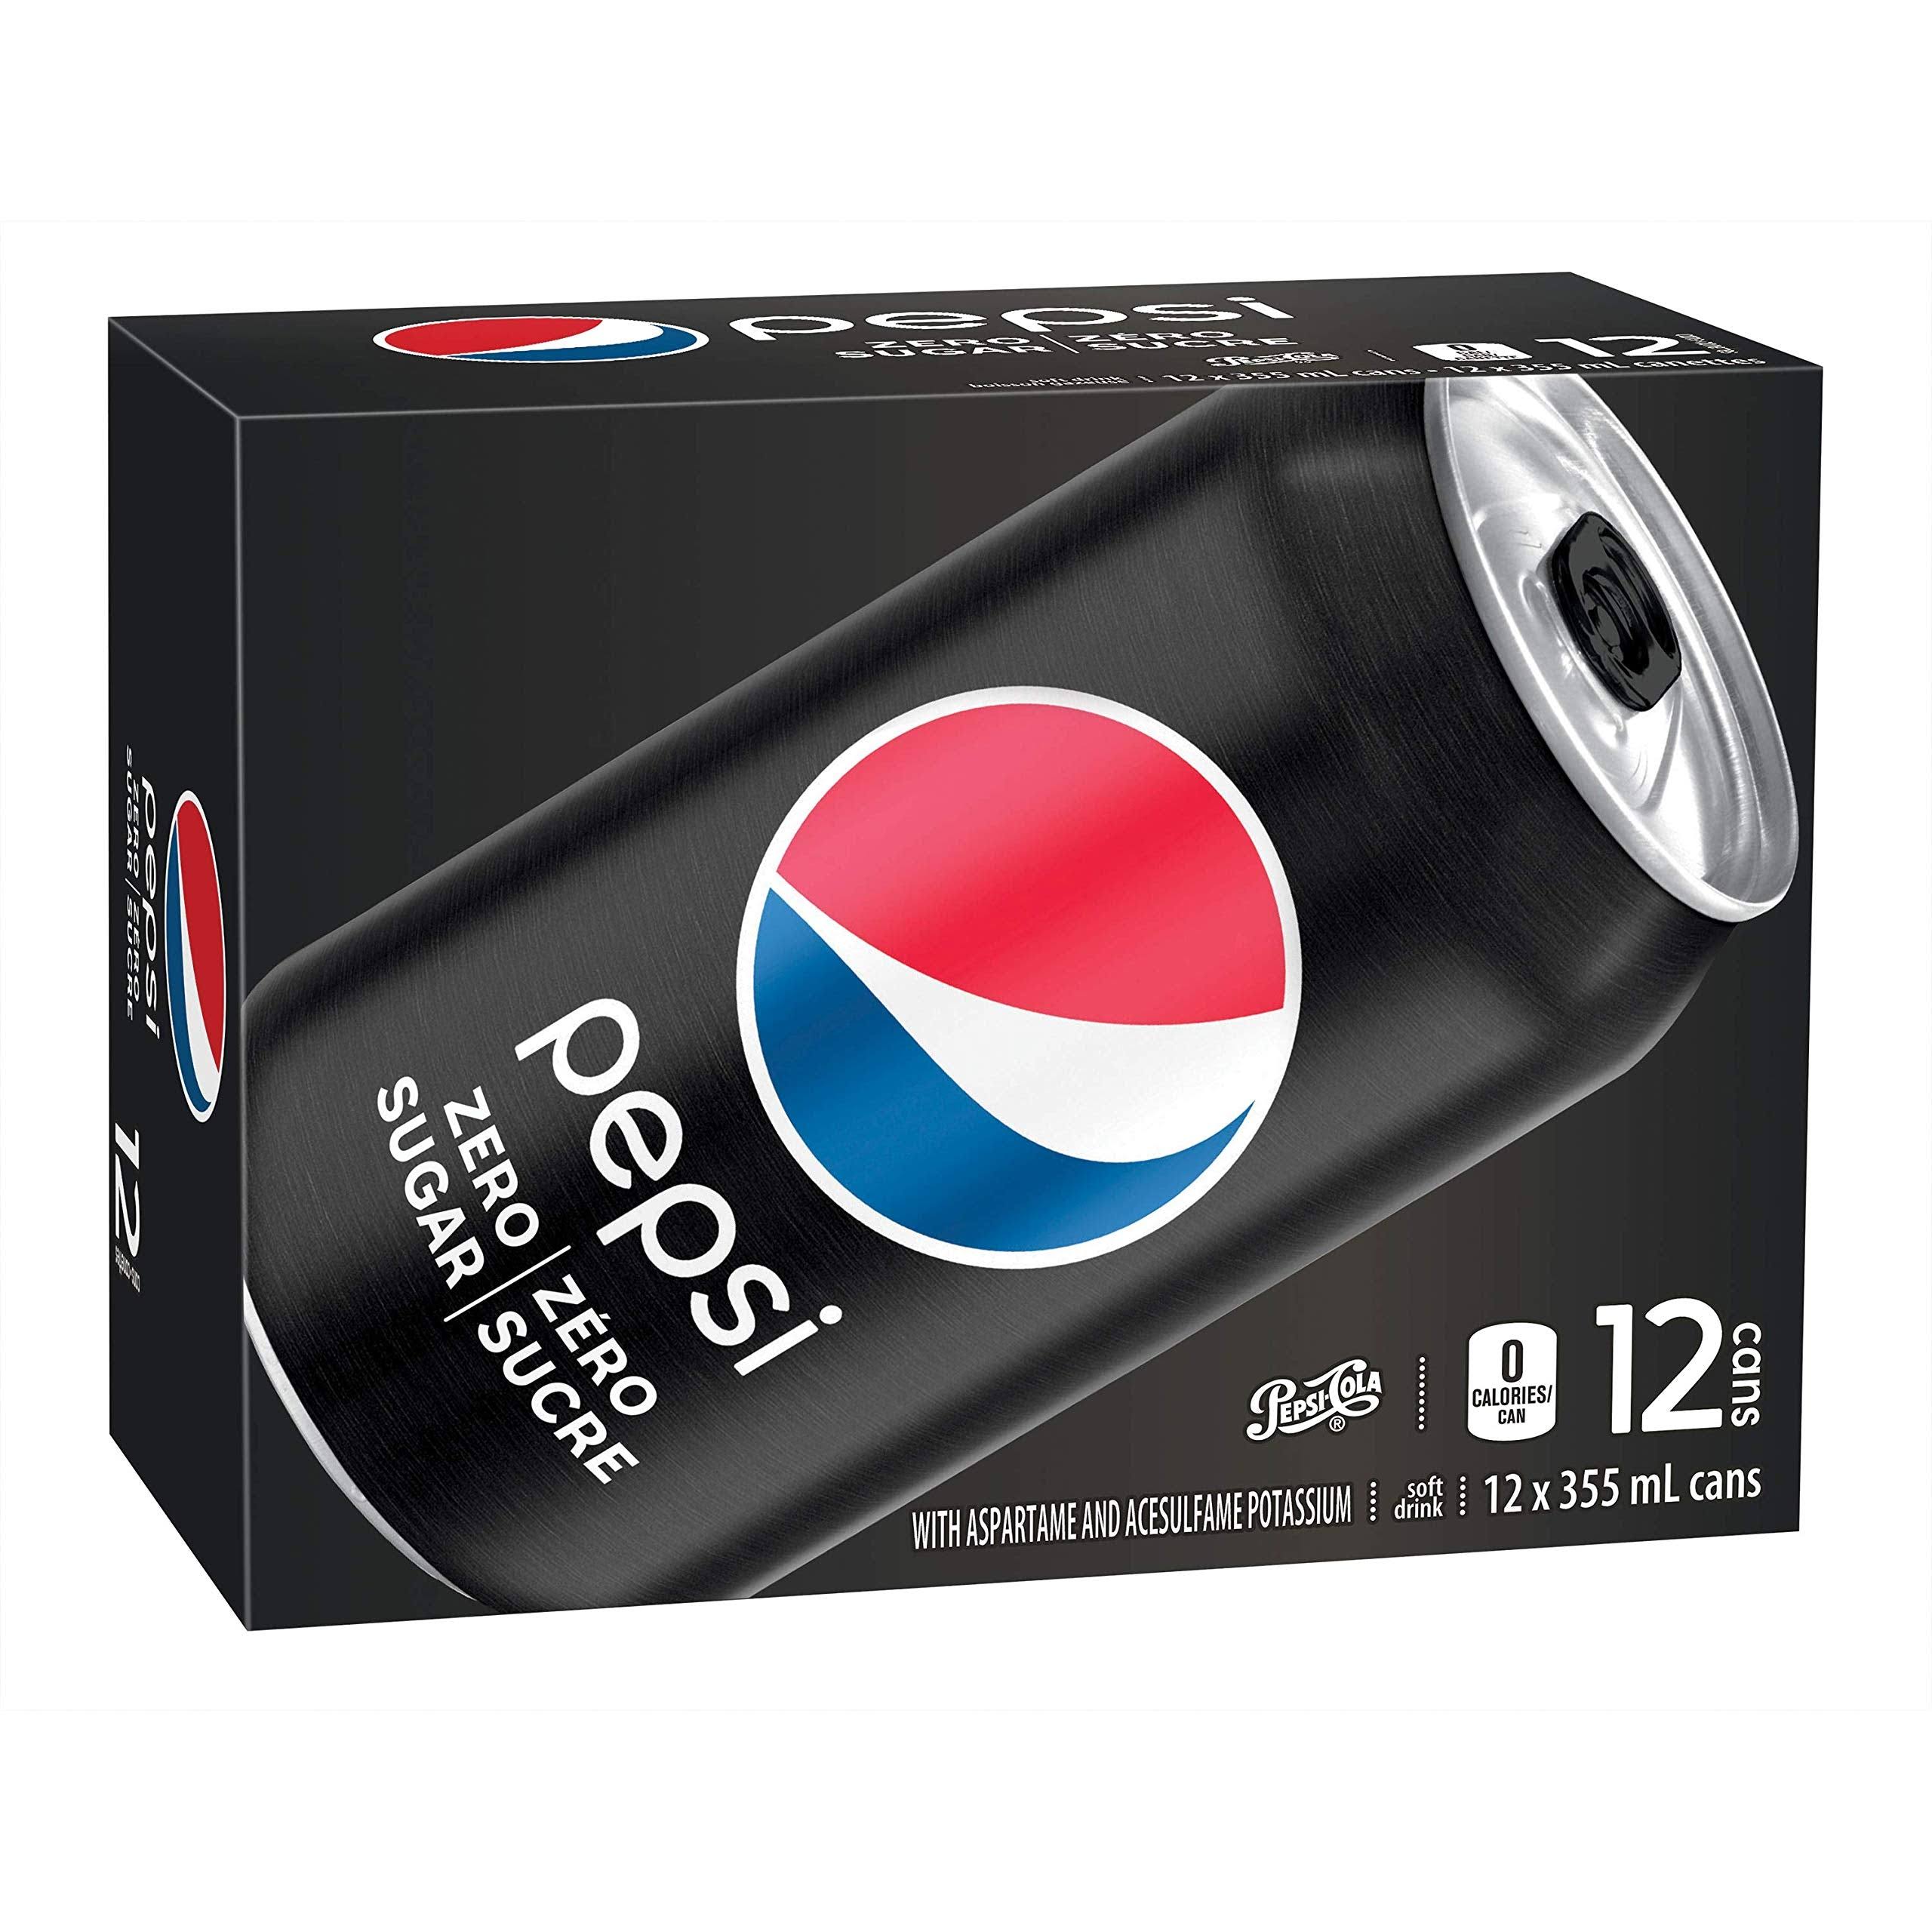 Pepsi Zero Sugar Cans, Zero Calories, Max Pepsi Taste 355ml/12oz., 12pk. {Imported from Canada}